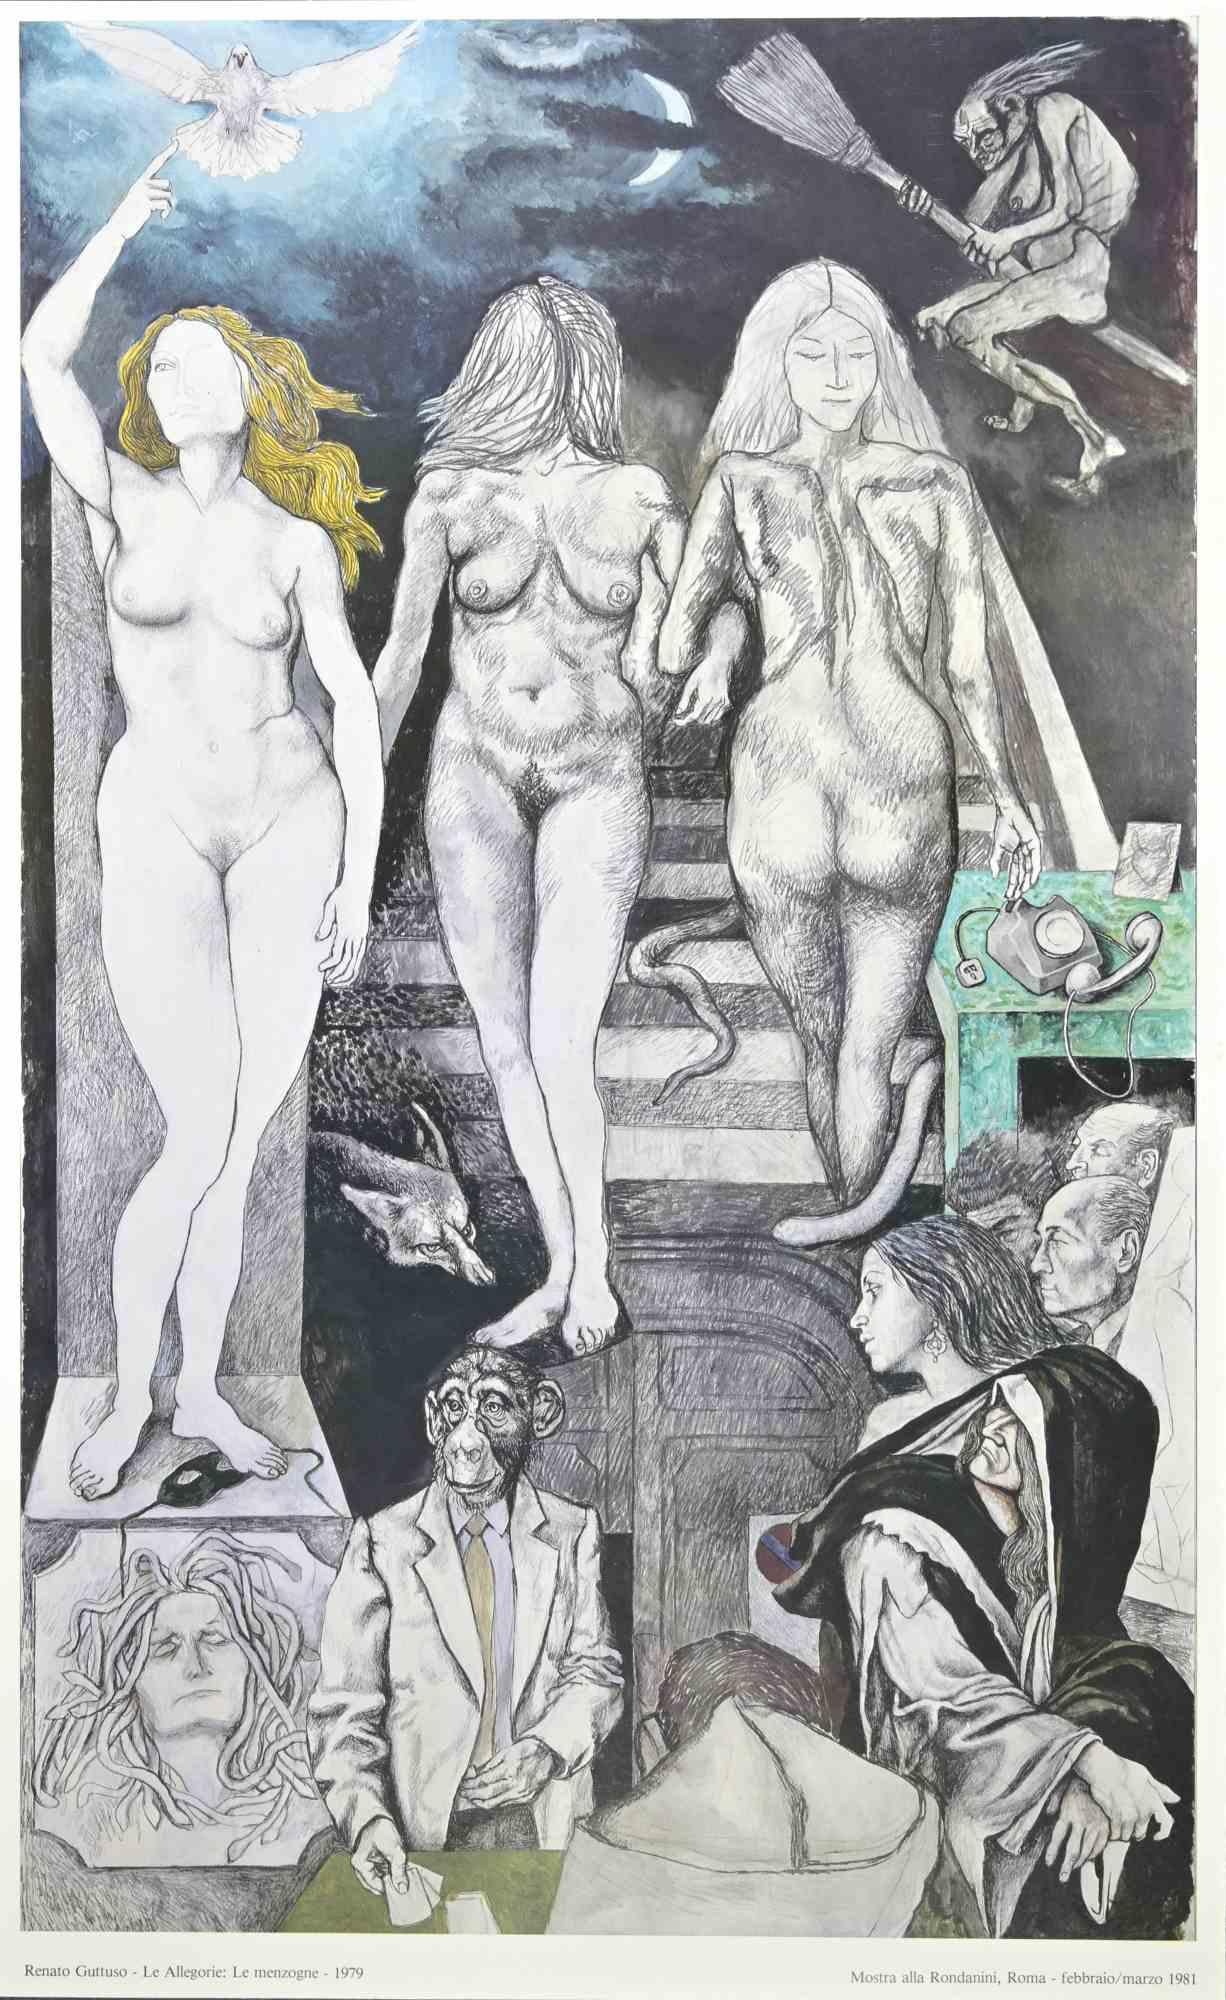 Allegories: Lies - Lithograph by Renato Guttuso - 1981